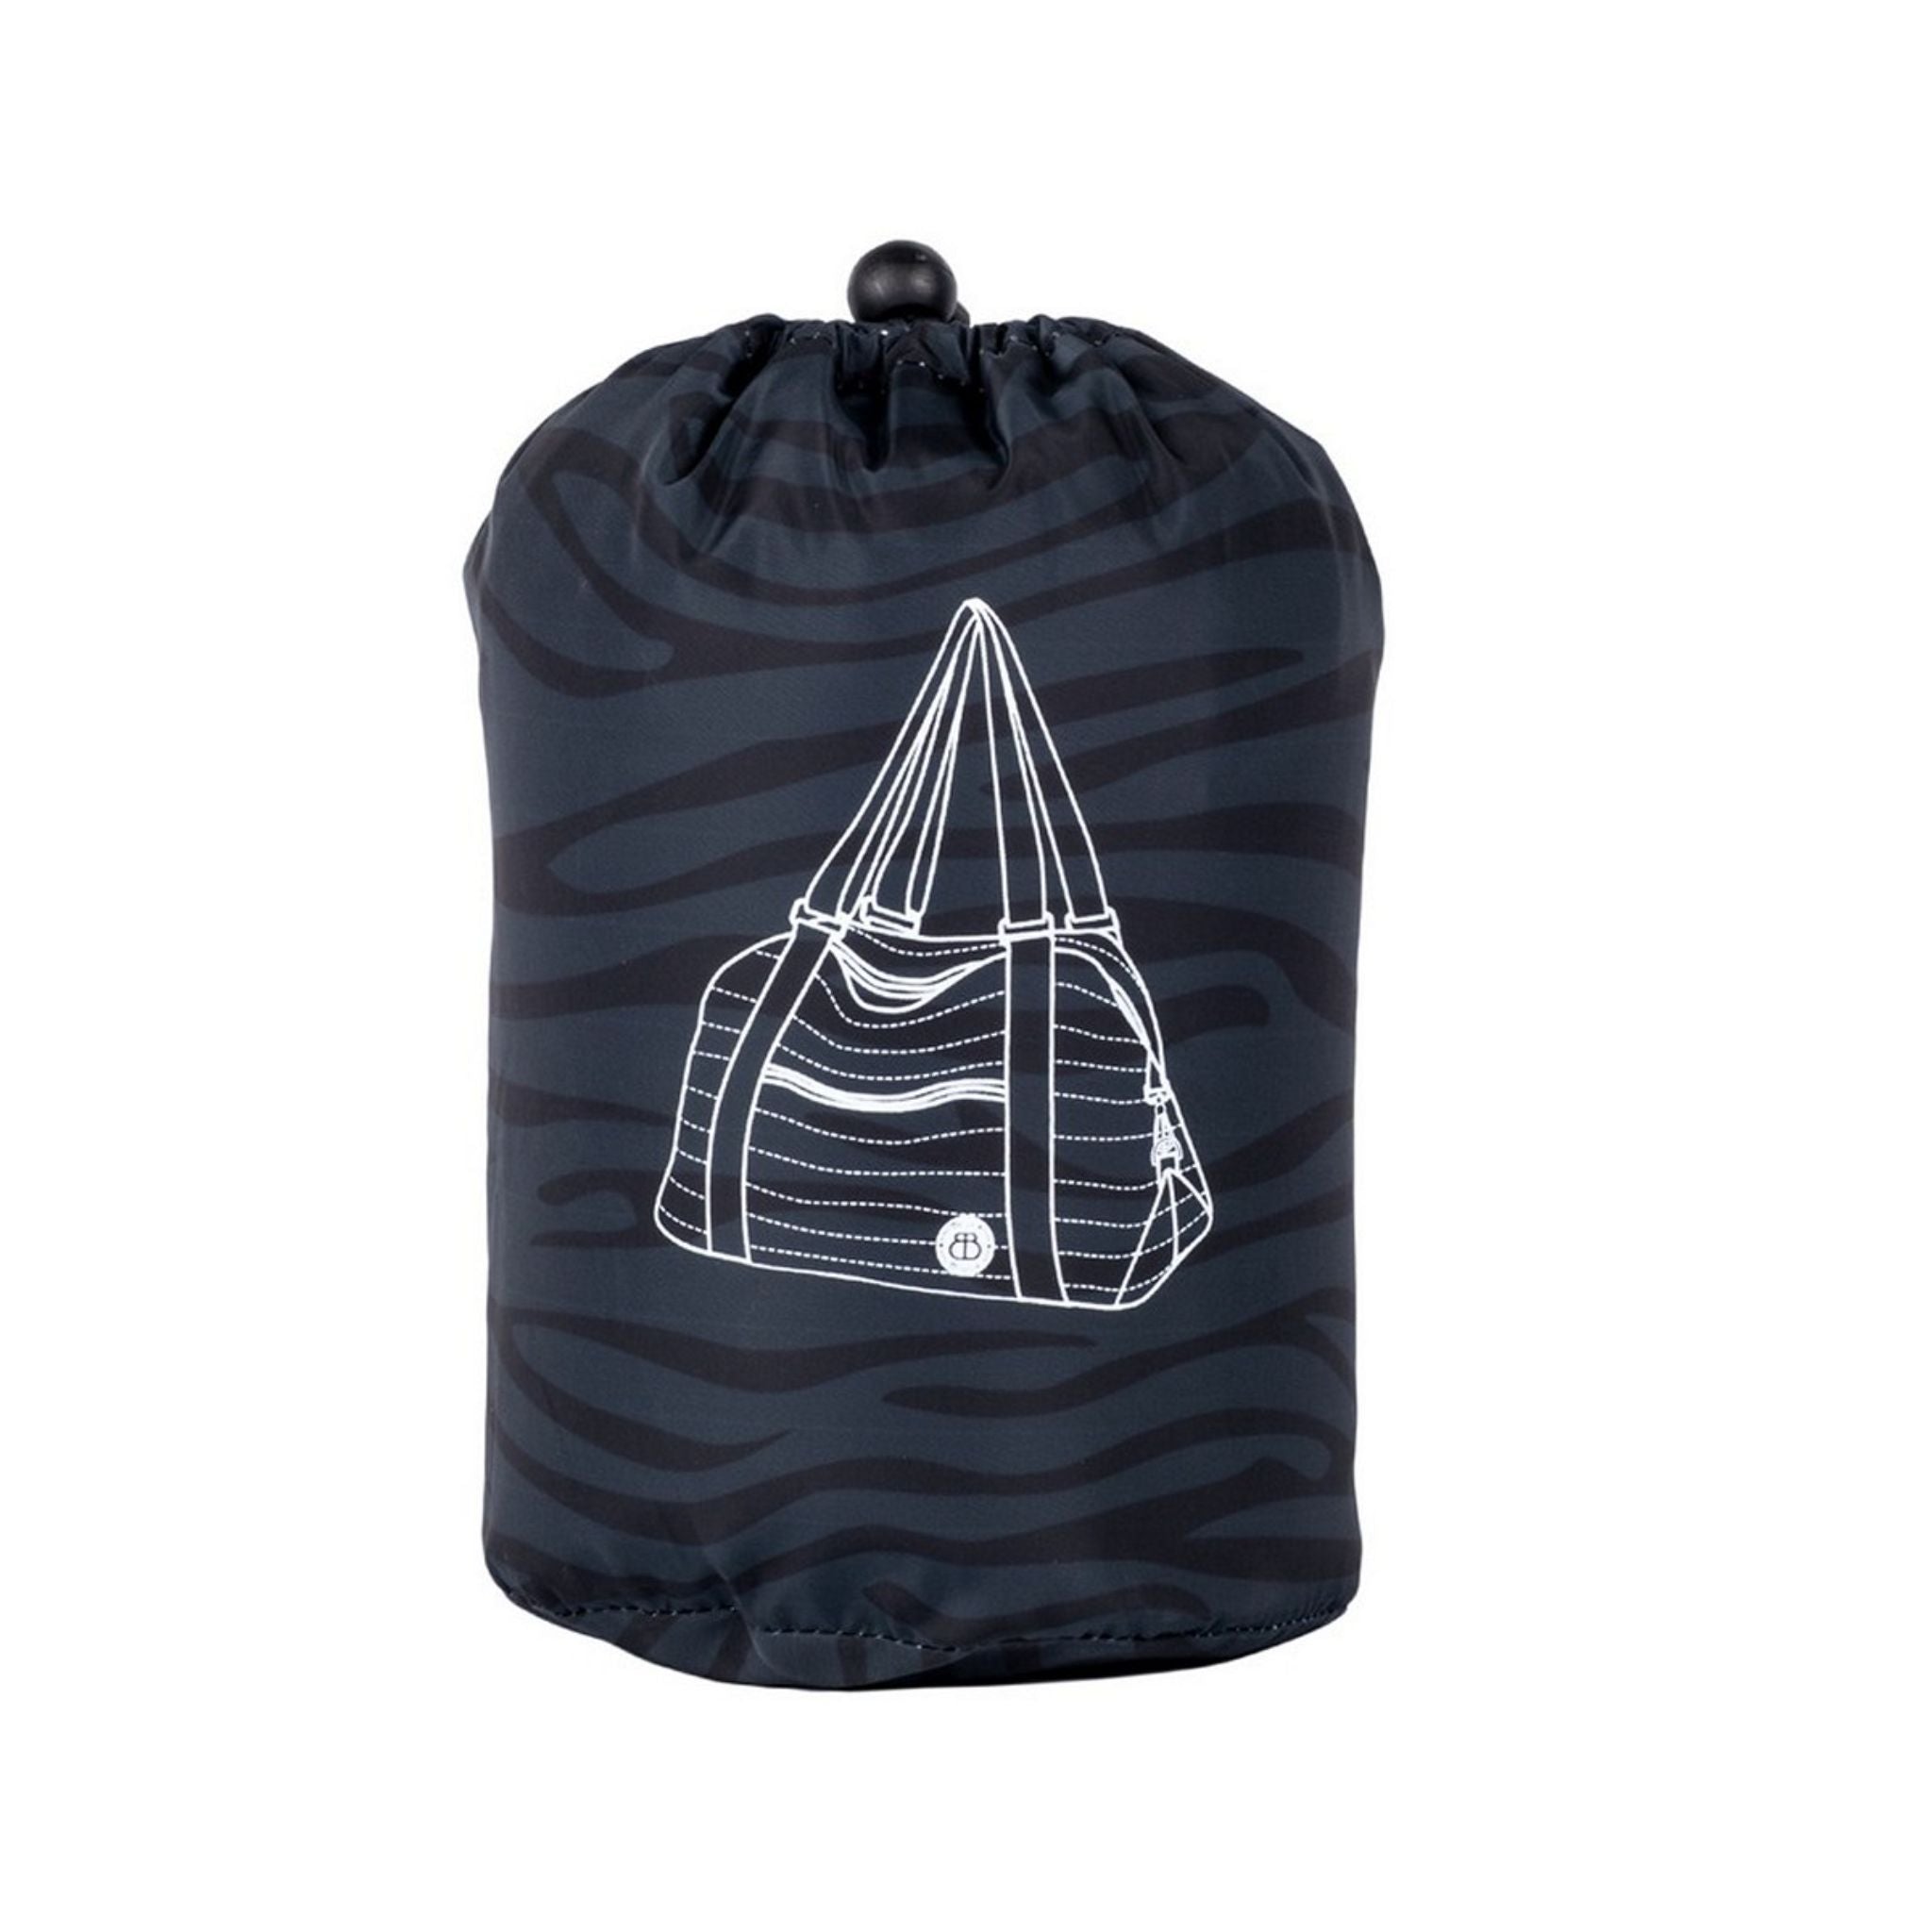 B.Baggies Quilted Nylon Sports Bag Zebra Black Grey